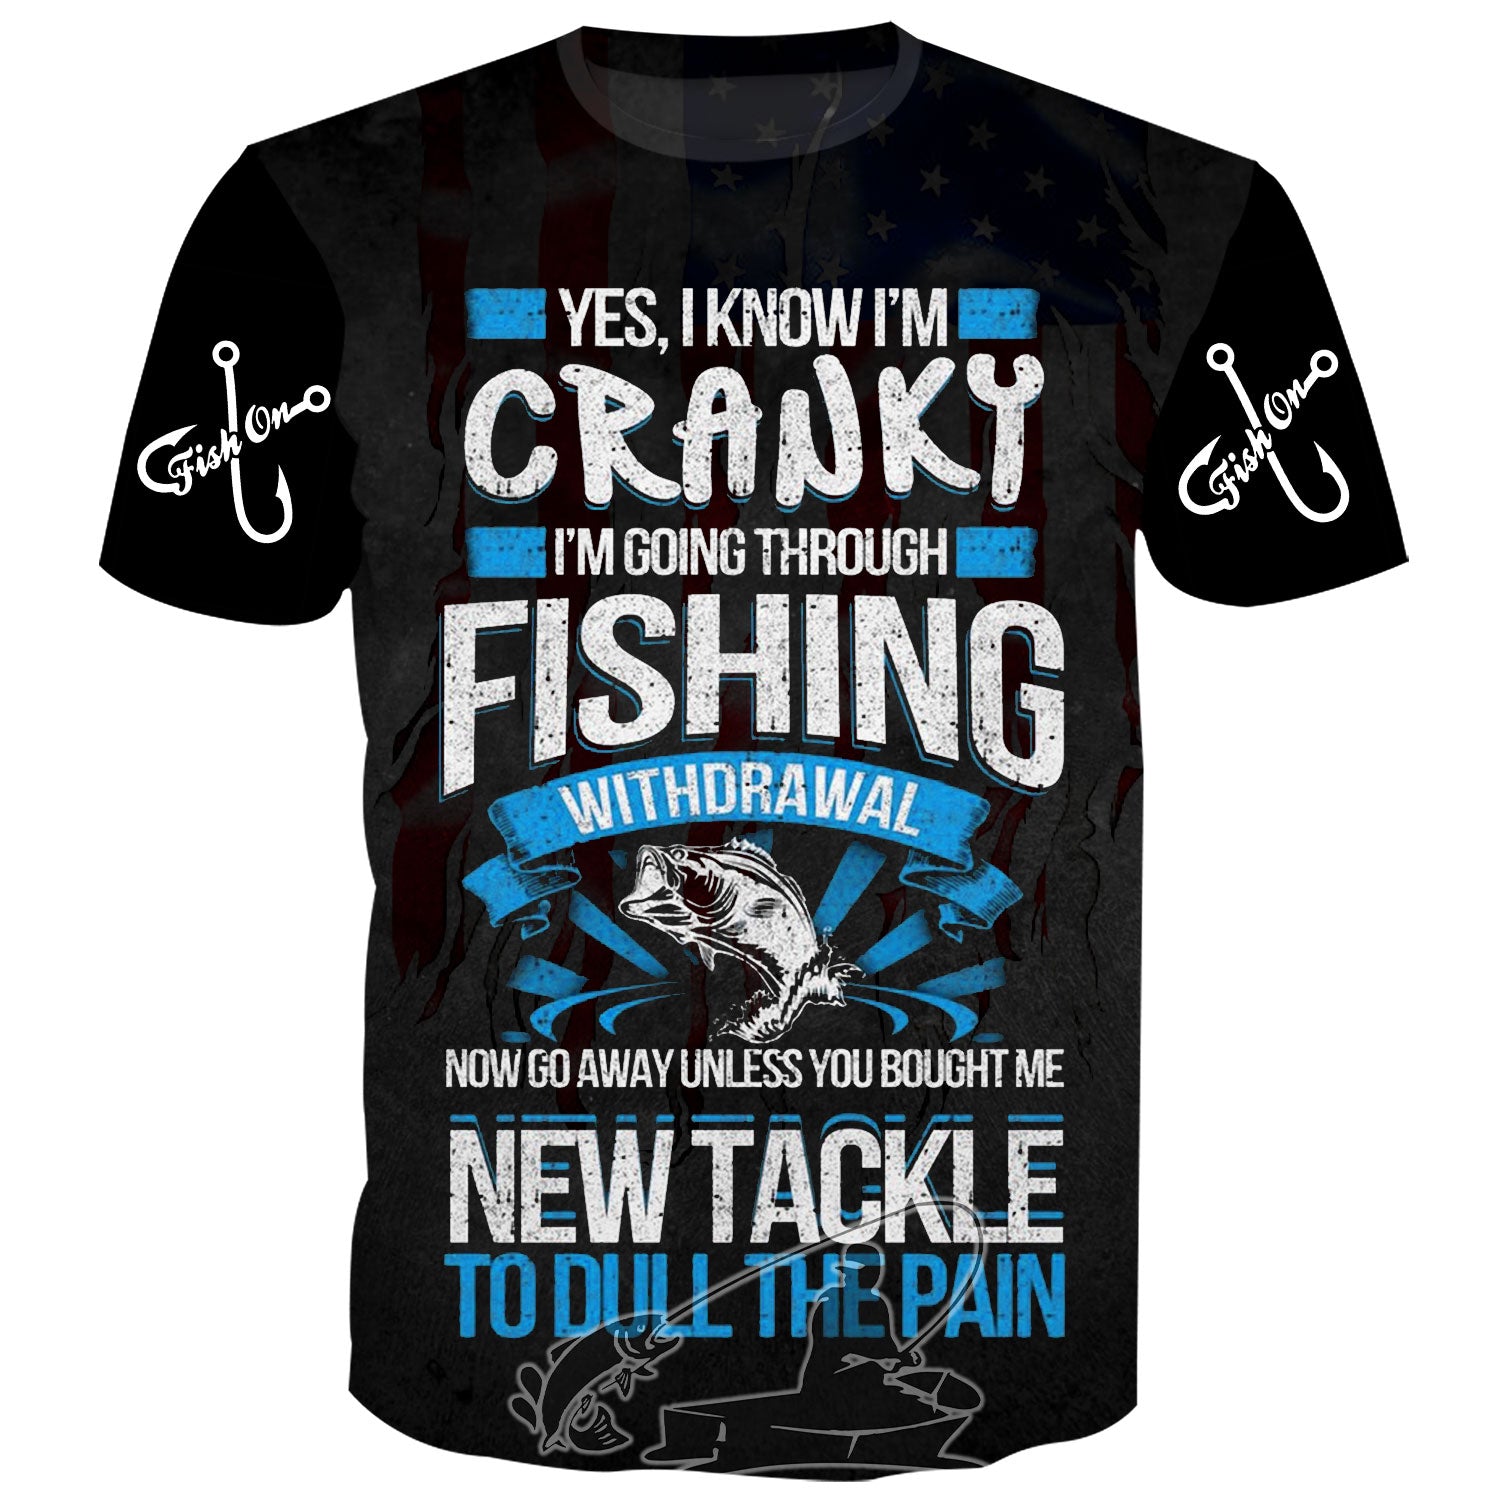 Yes, I know I'm cranky - T-Shirt